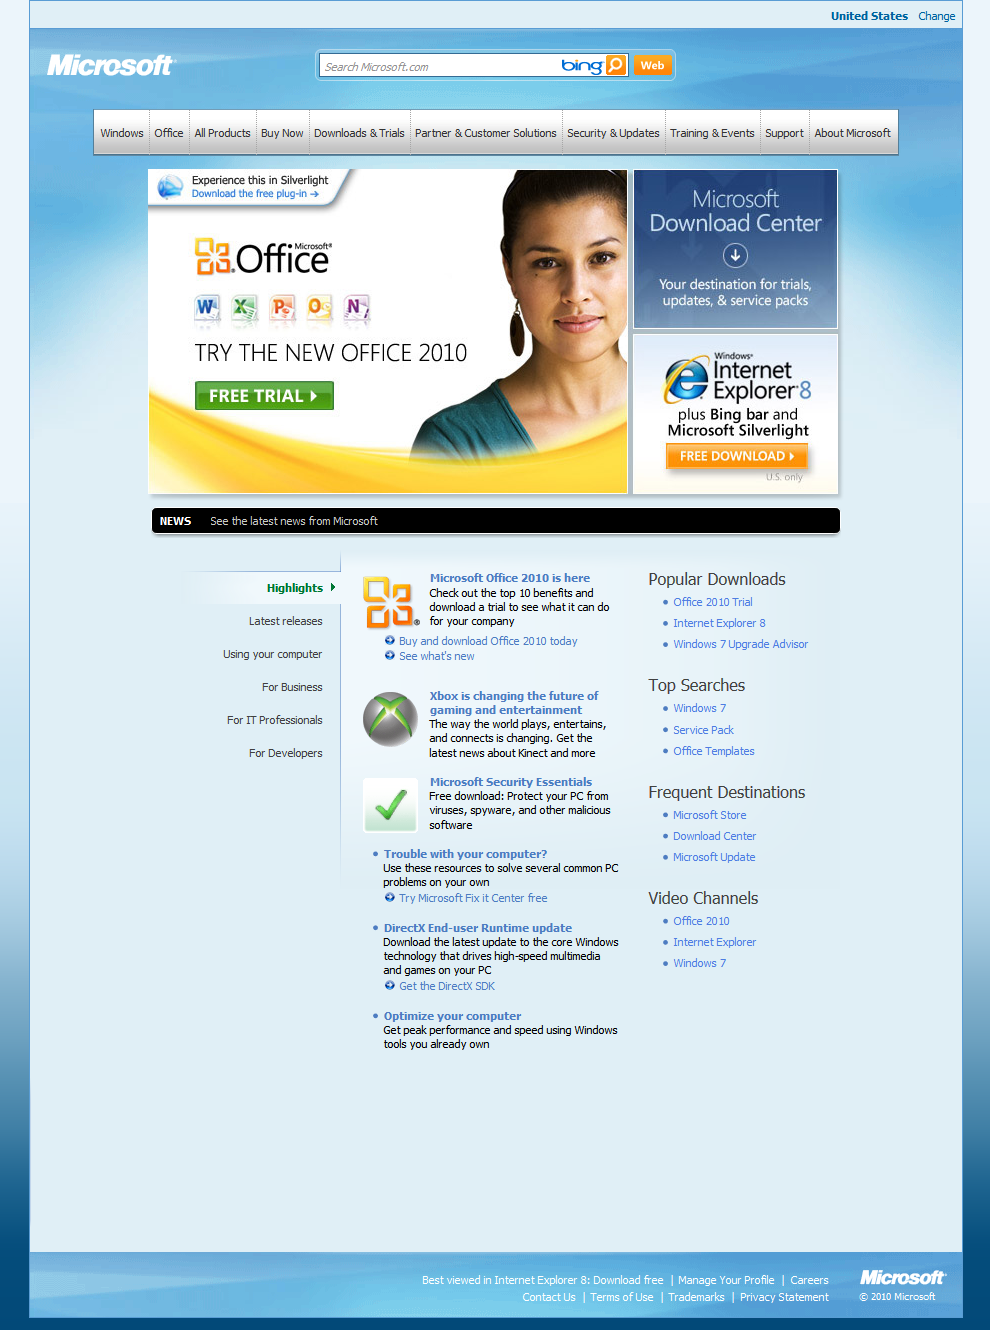 Microsoft website in 2010